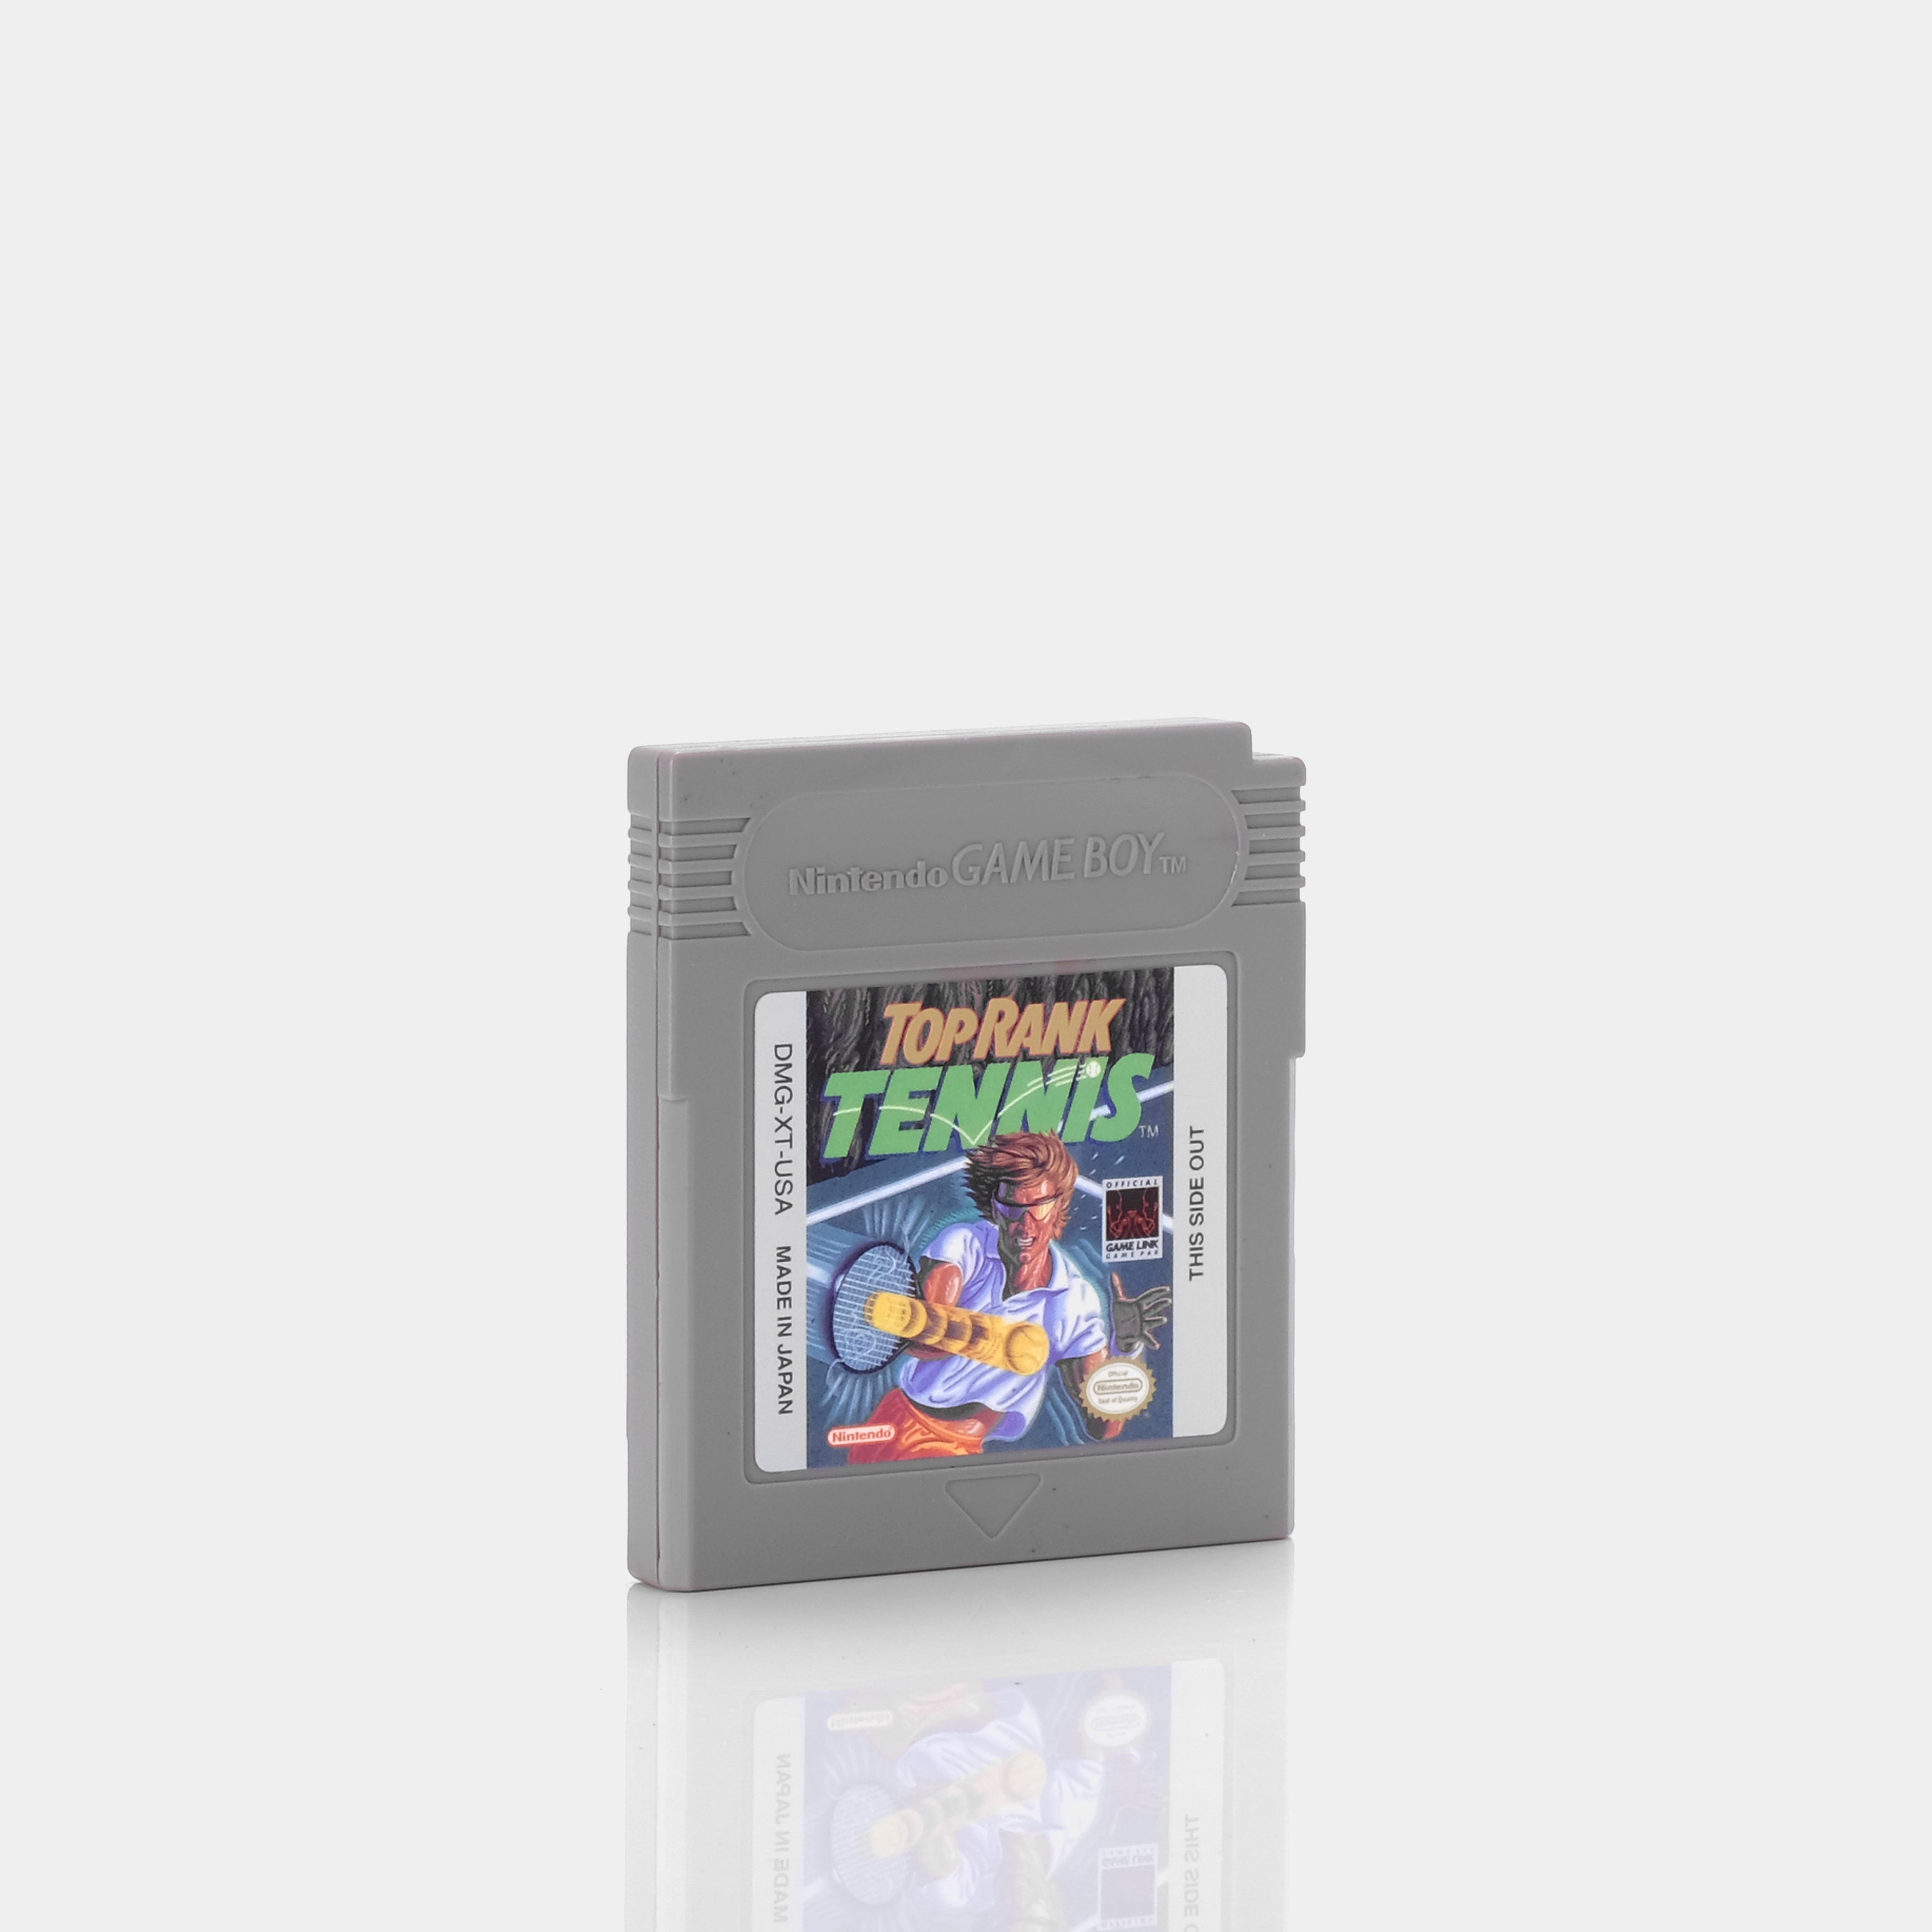 Top Rank Tennis Game Boy Game